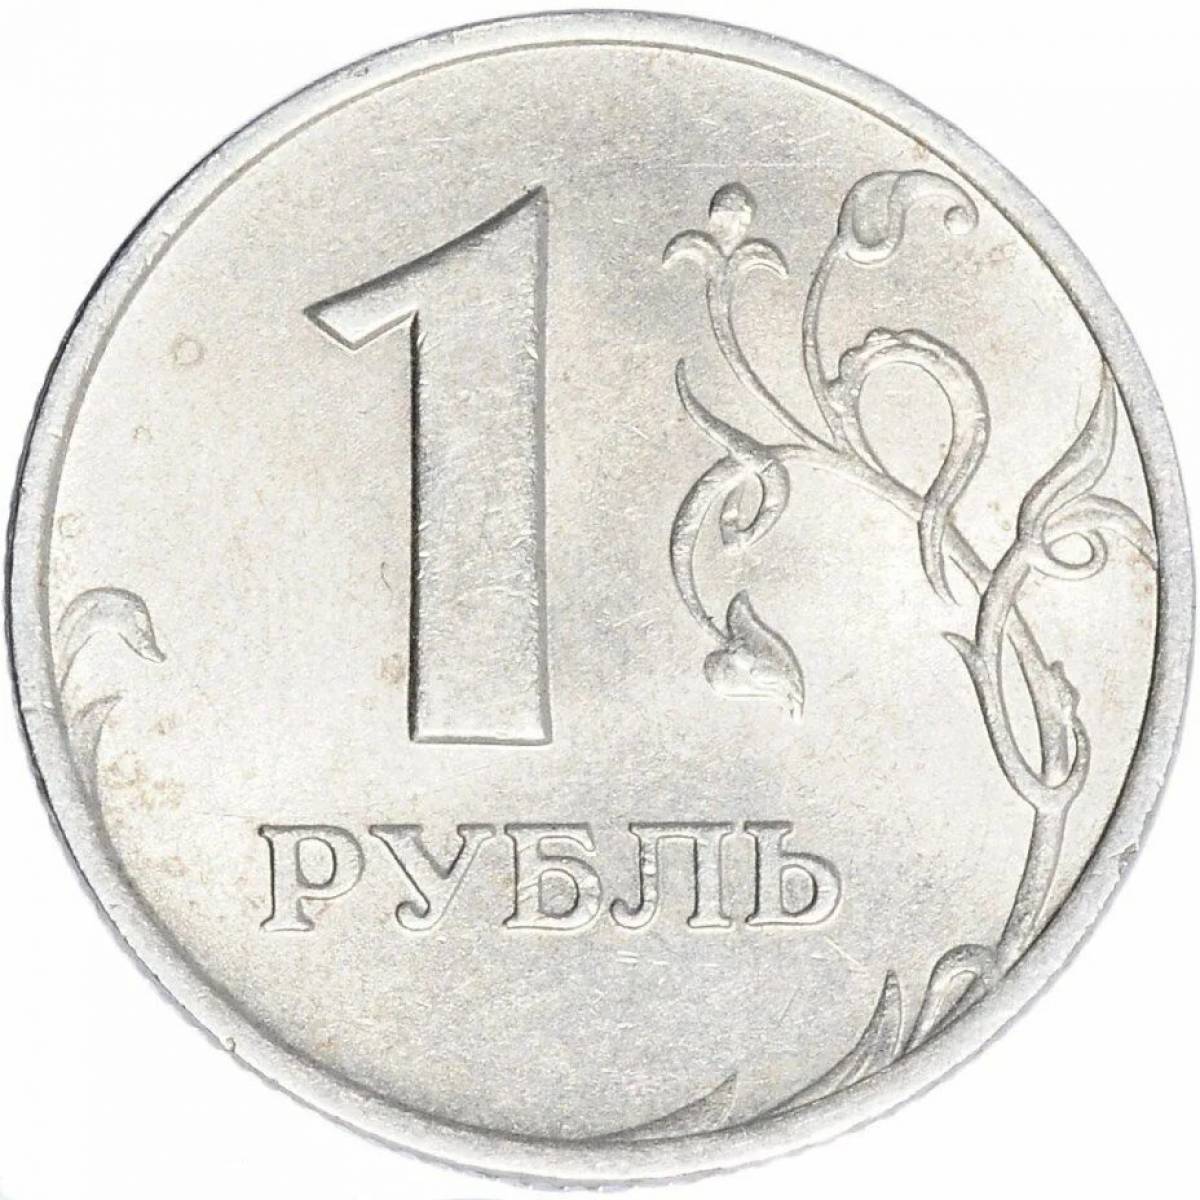 1 ruble #16